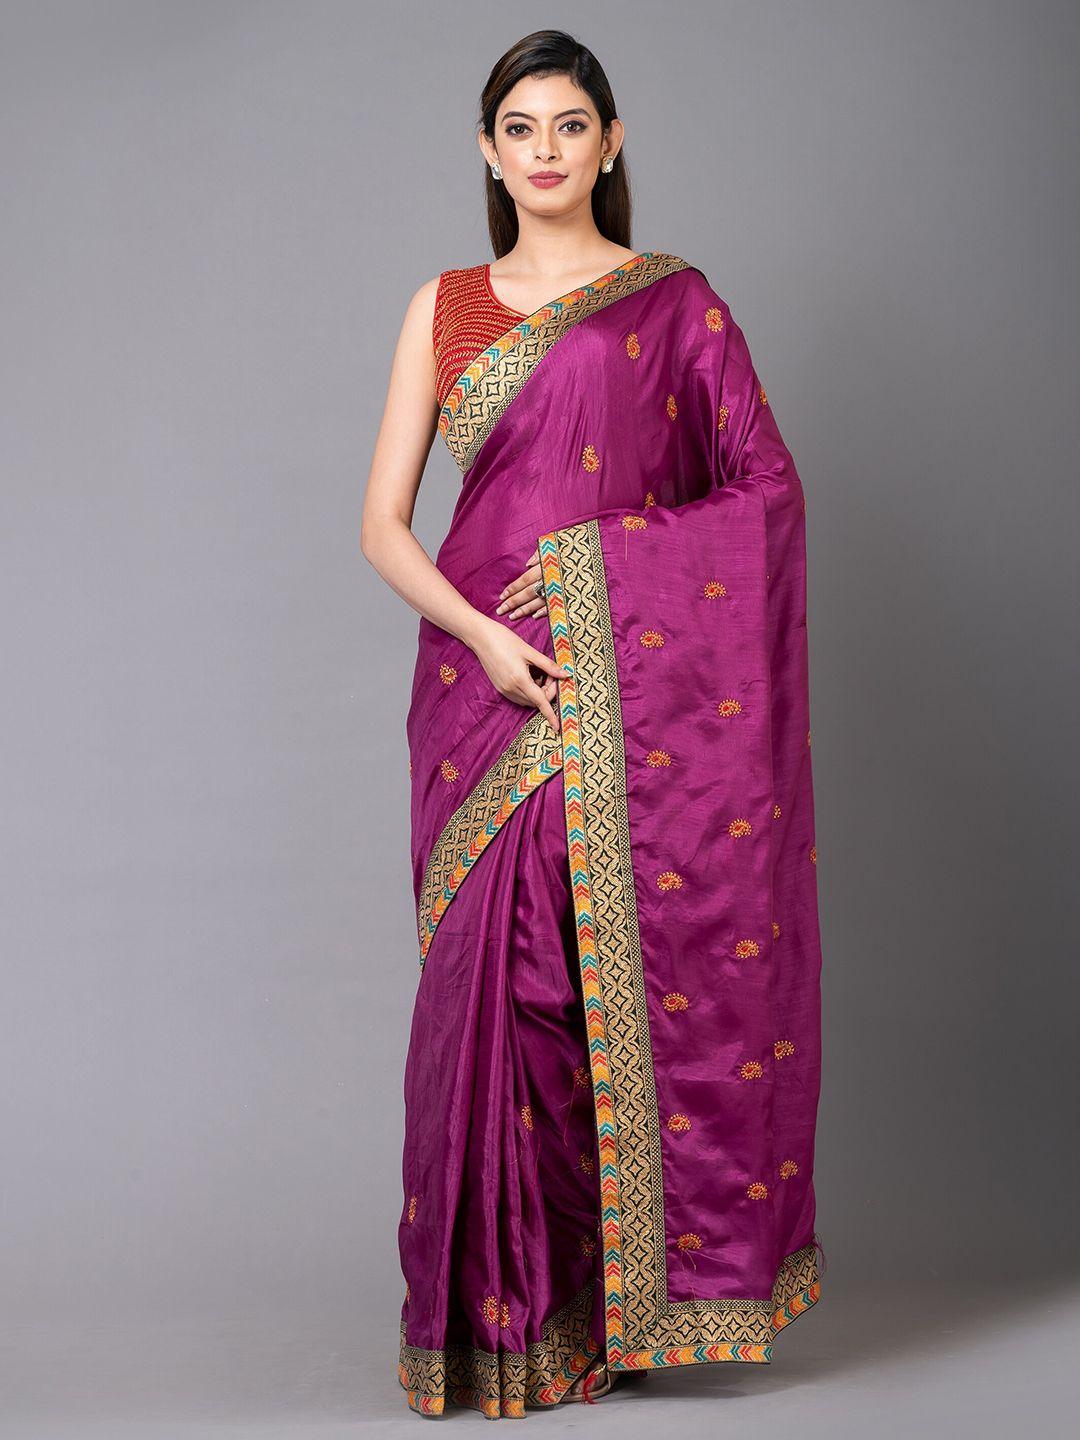 mahalasa purple embellished embroidered pure chiffon saree